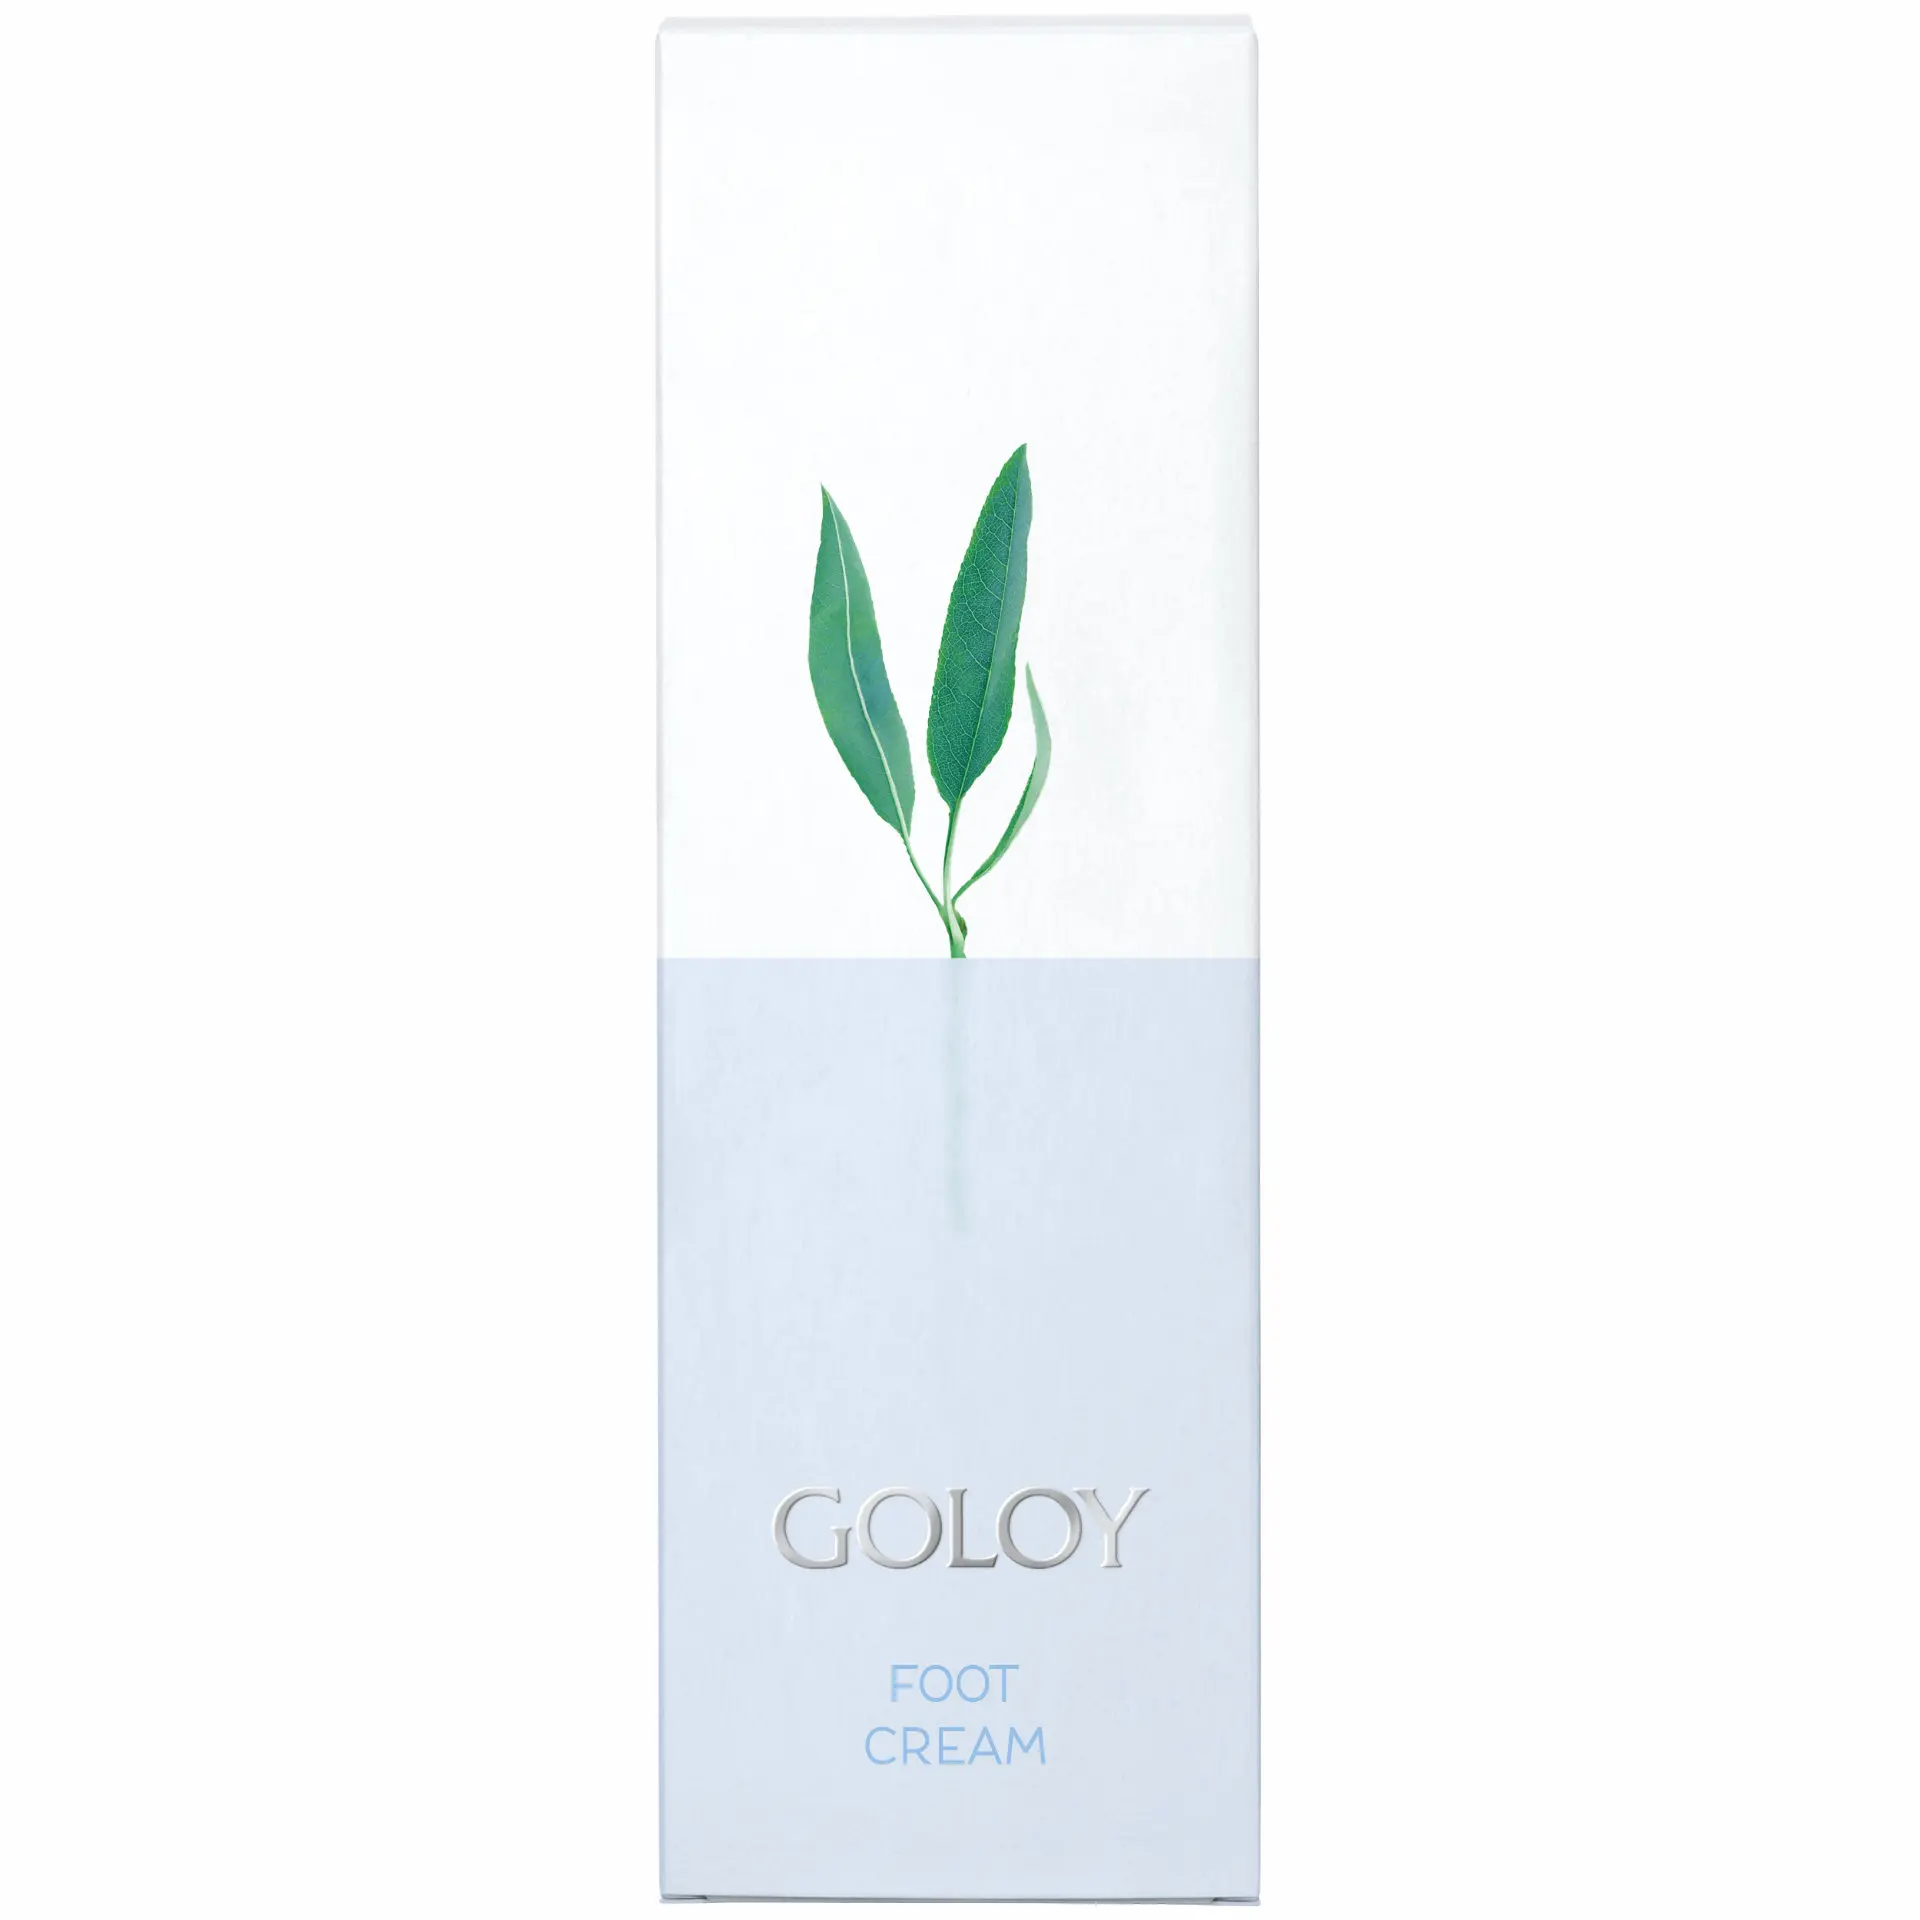 Goloy Foot Cream